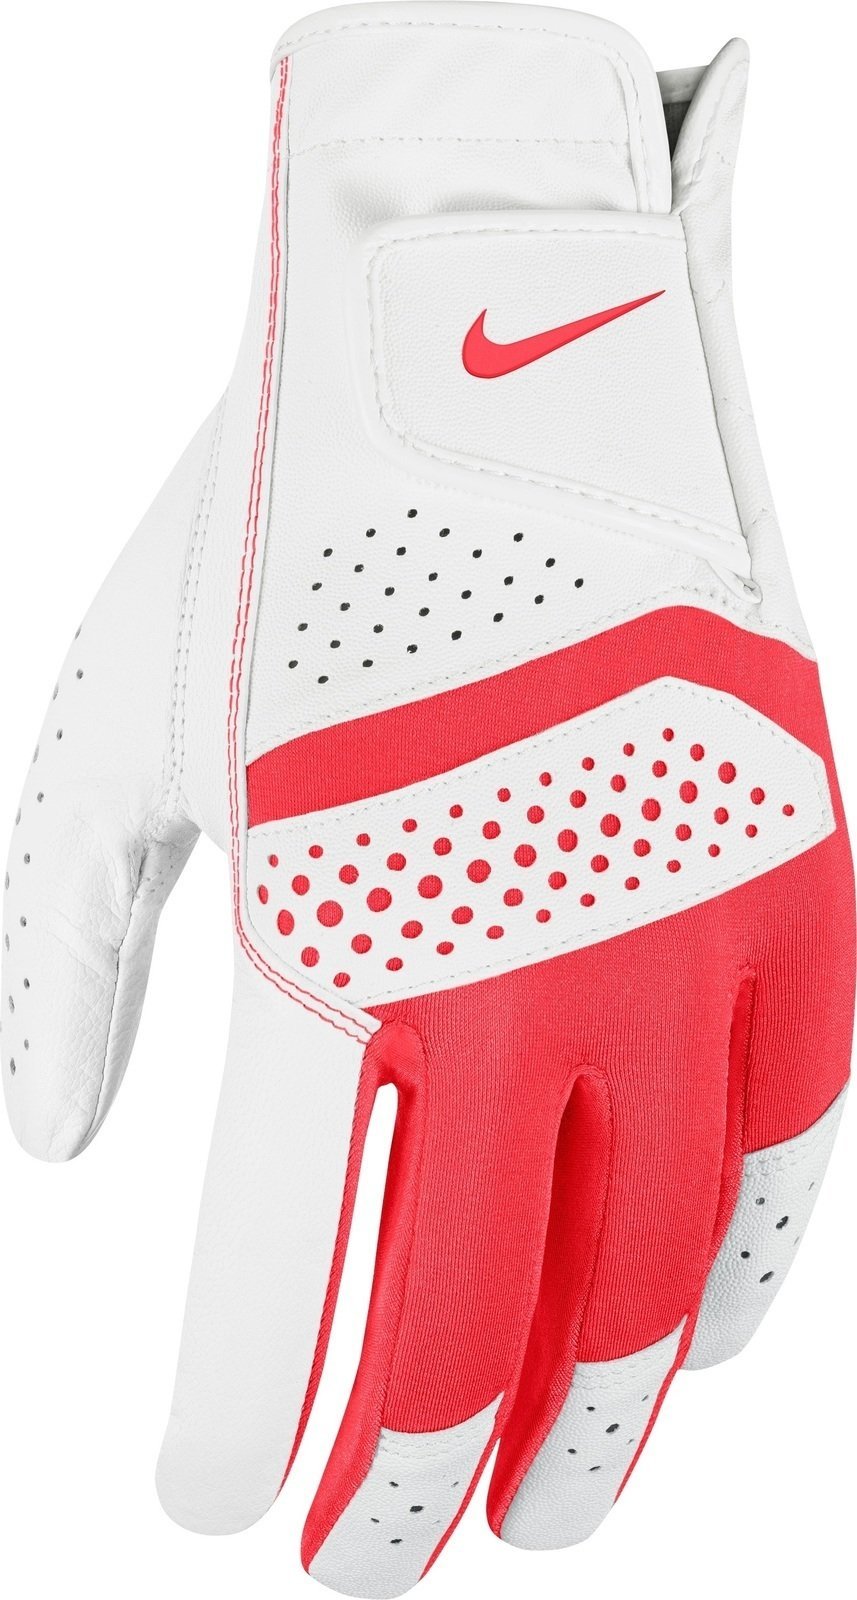 Handschoenen Nike Tech Extreme Vi Reg Lh 106 L